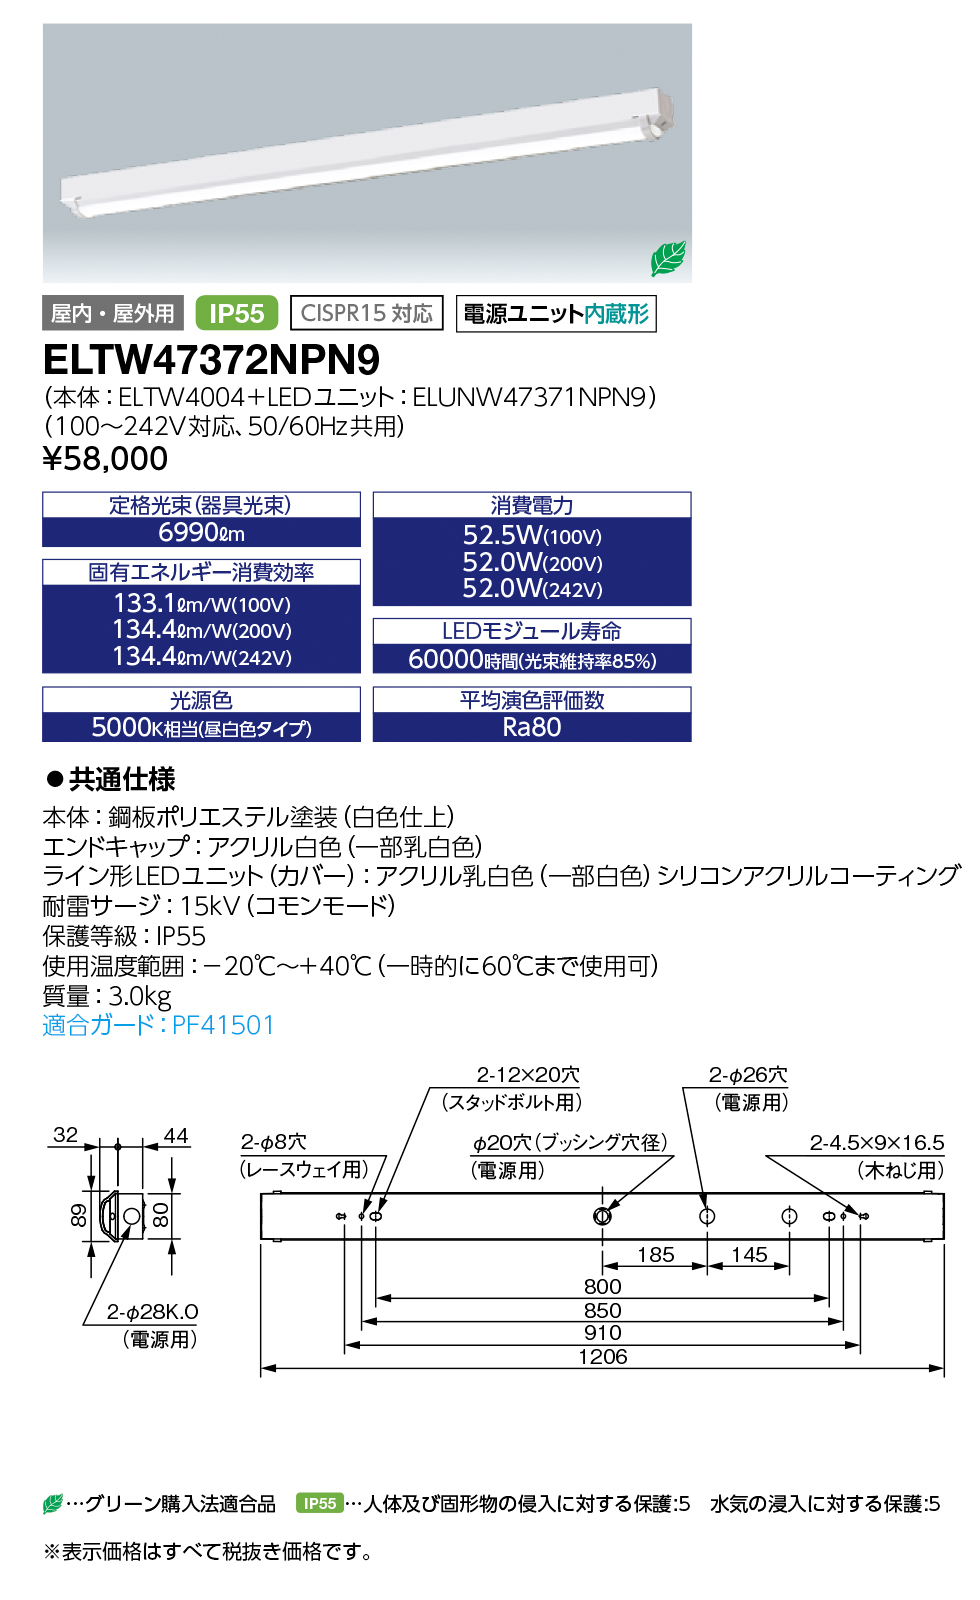 ELTW47372NPN9